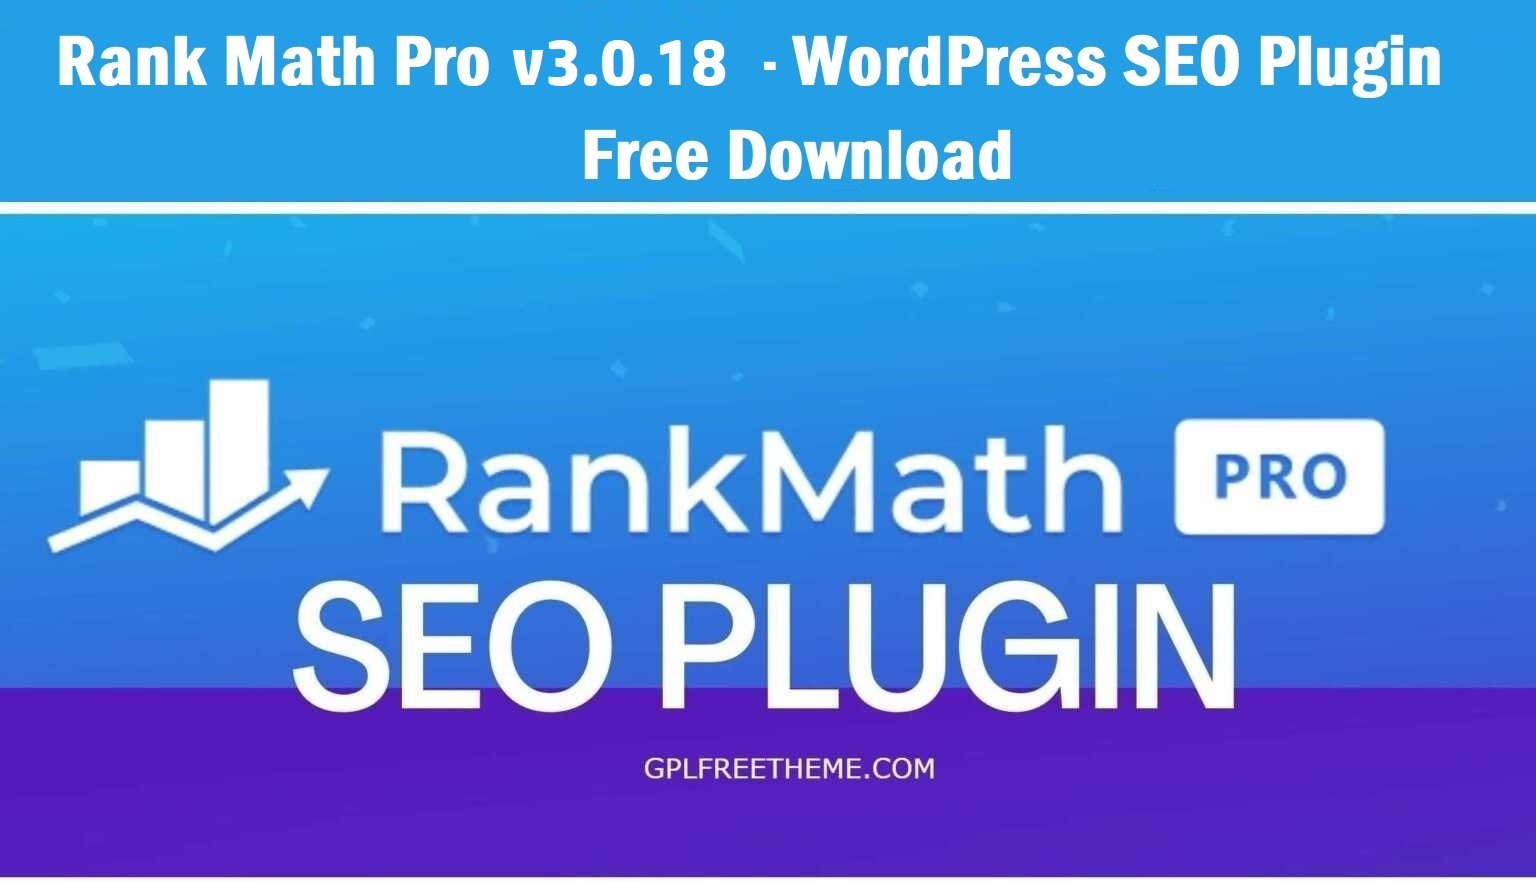 Rank Math Pro v3.0.18 - SEO Plugin Free Download [Activated]